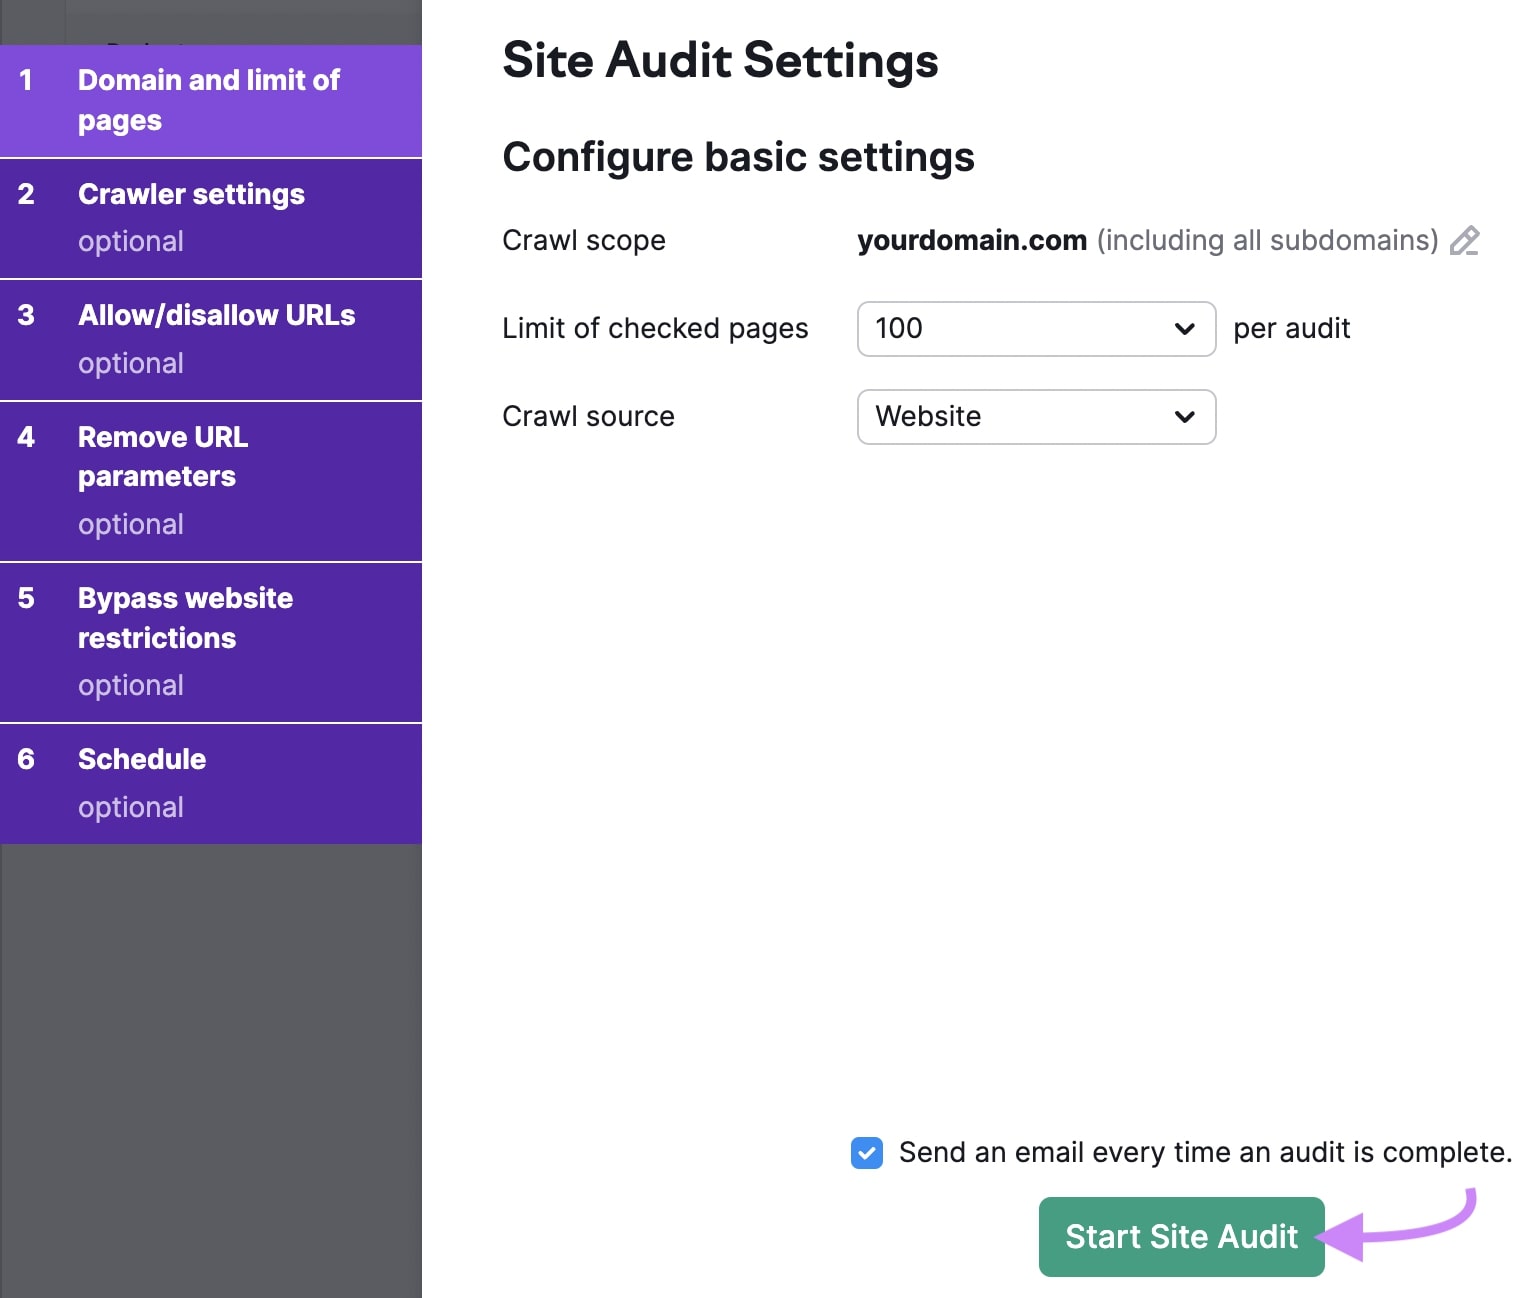 "Site Audit Settings" window